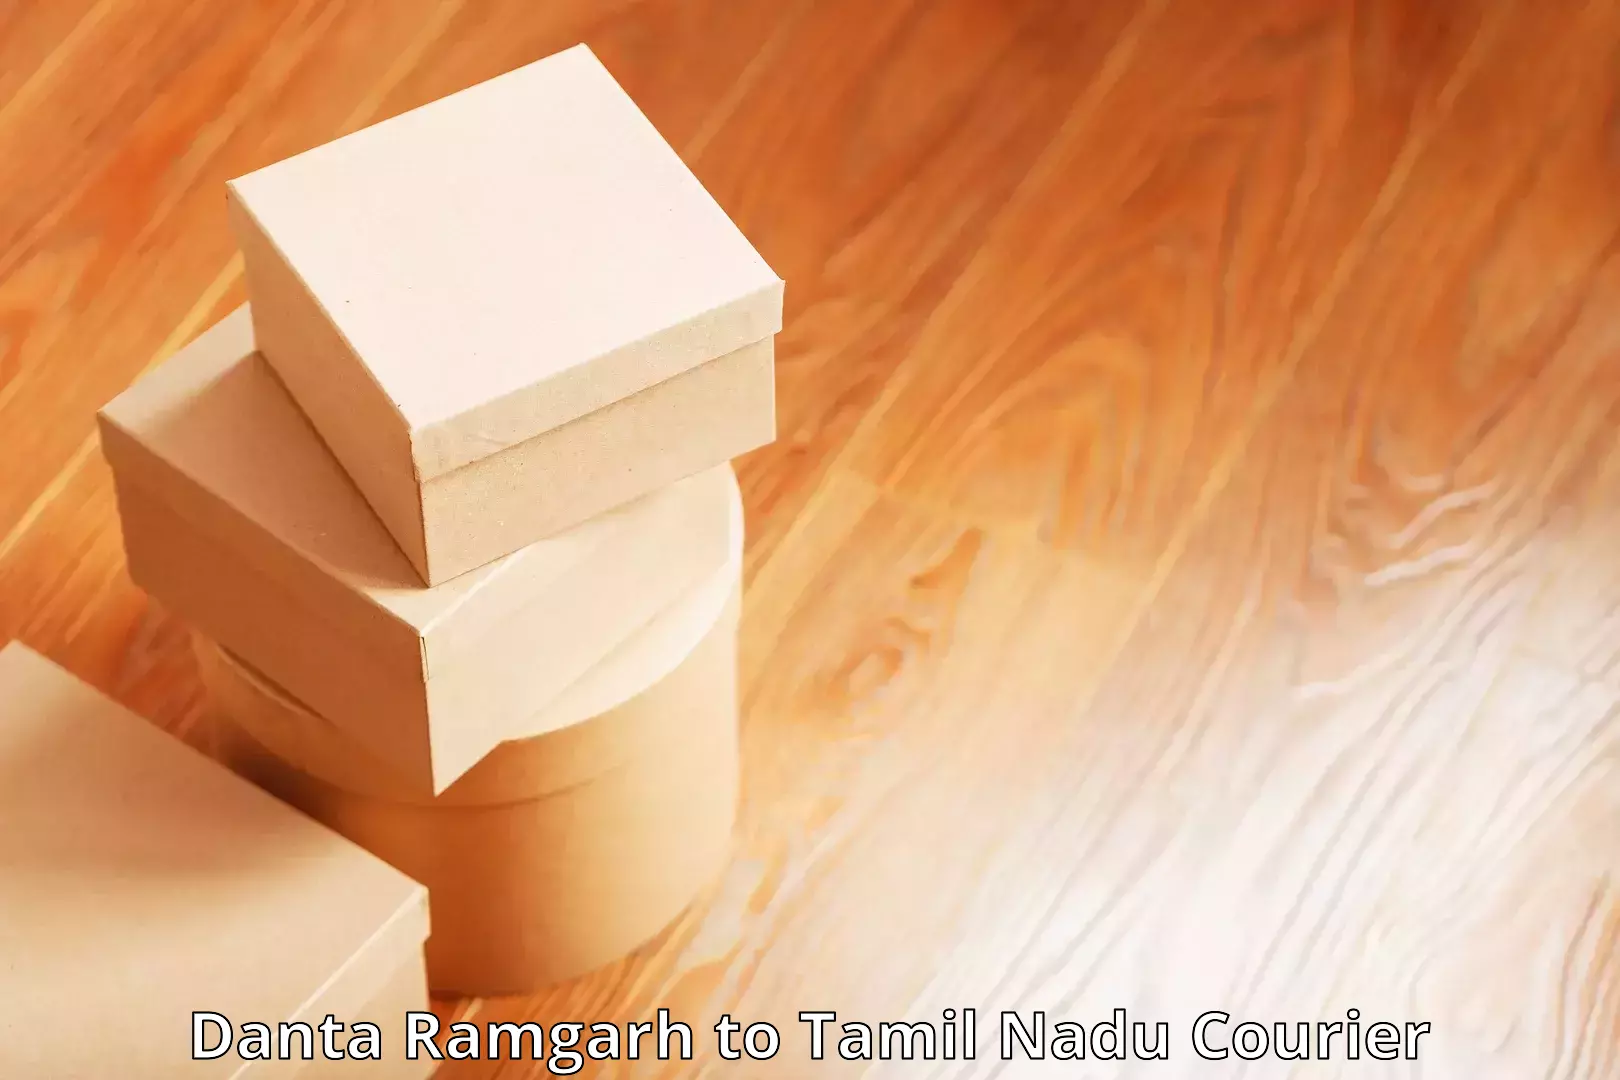 Cargo delivery service Danta Ramgarh to Madurai